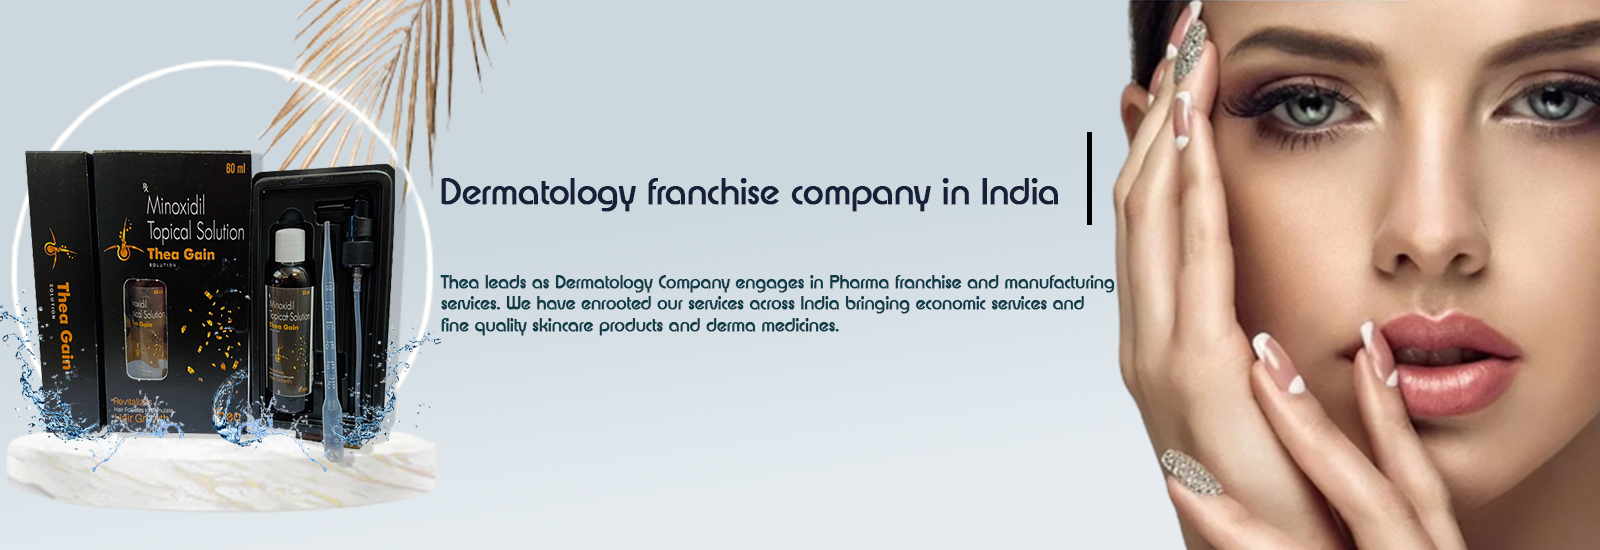 pcd pharma companies In dermatology